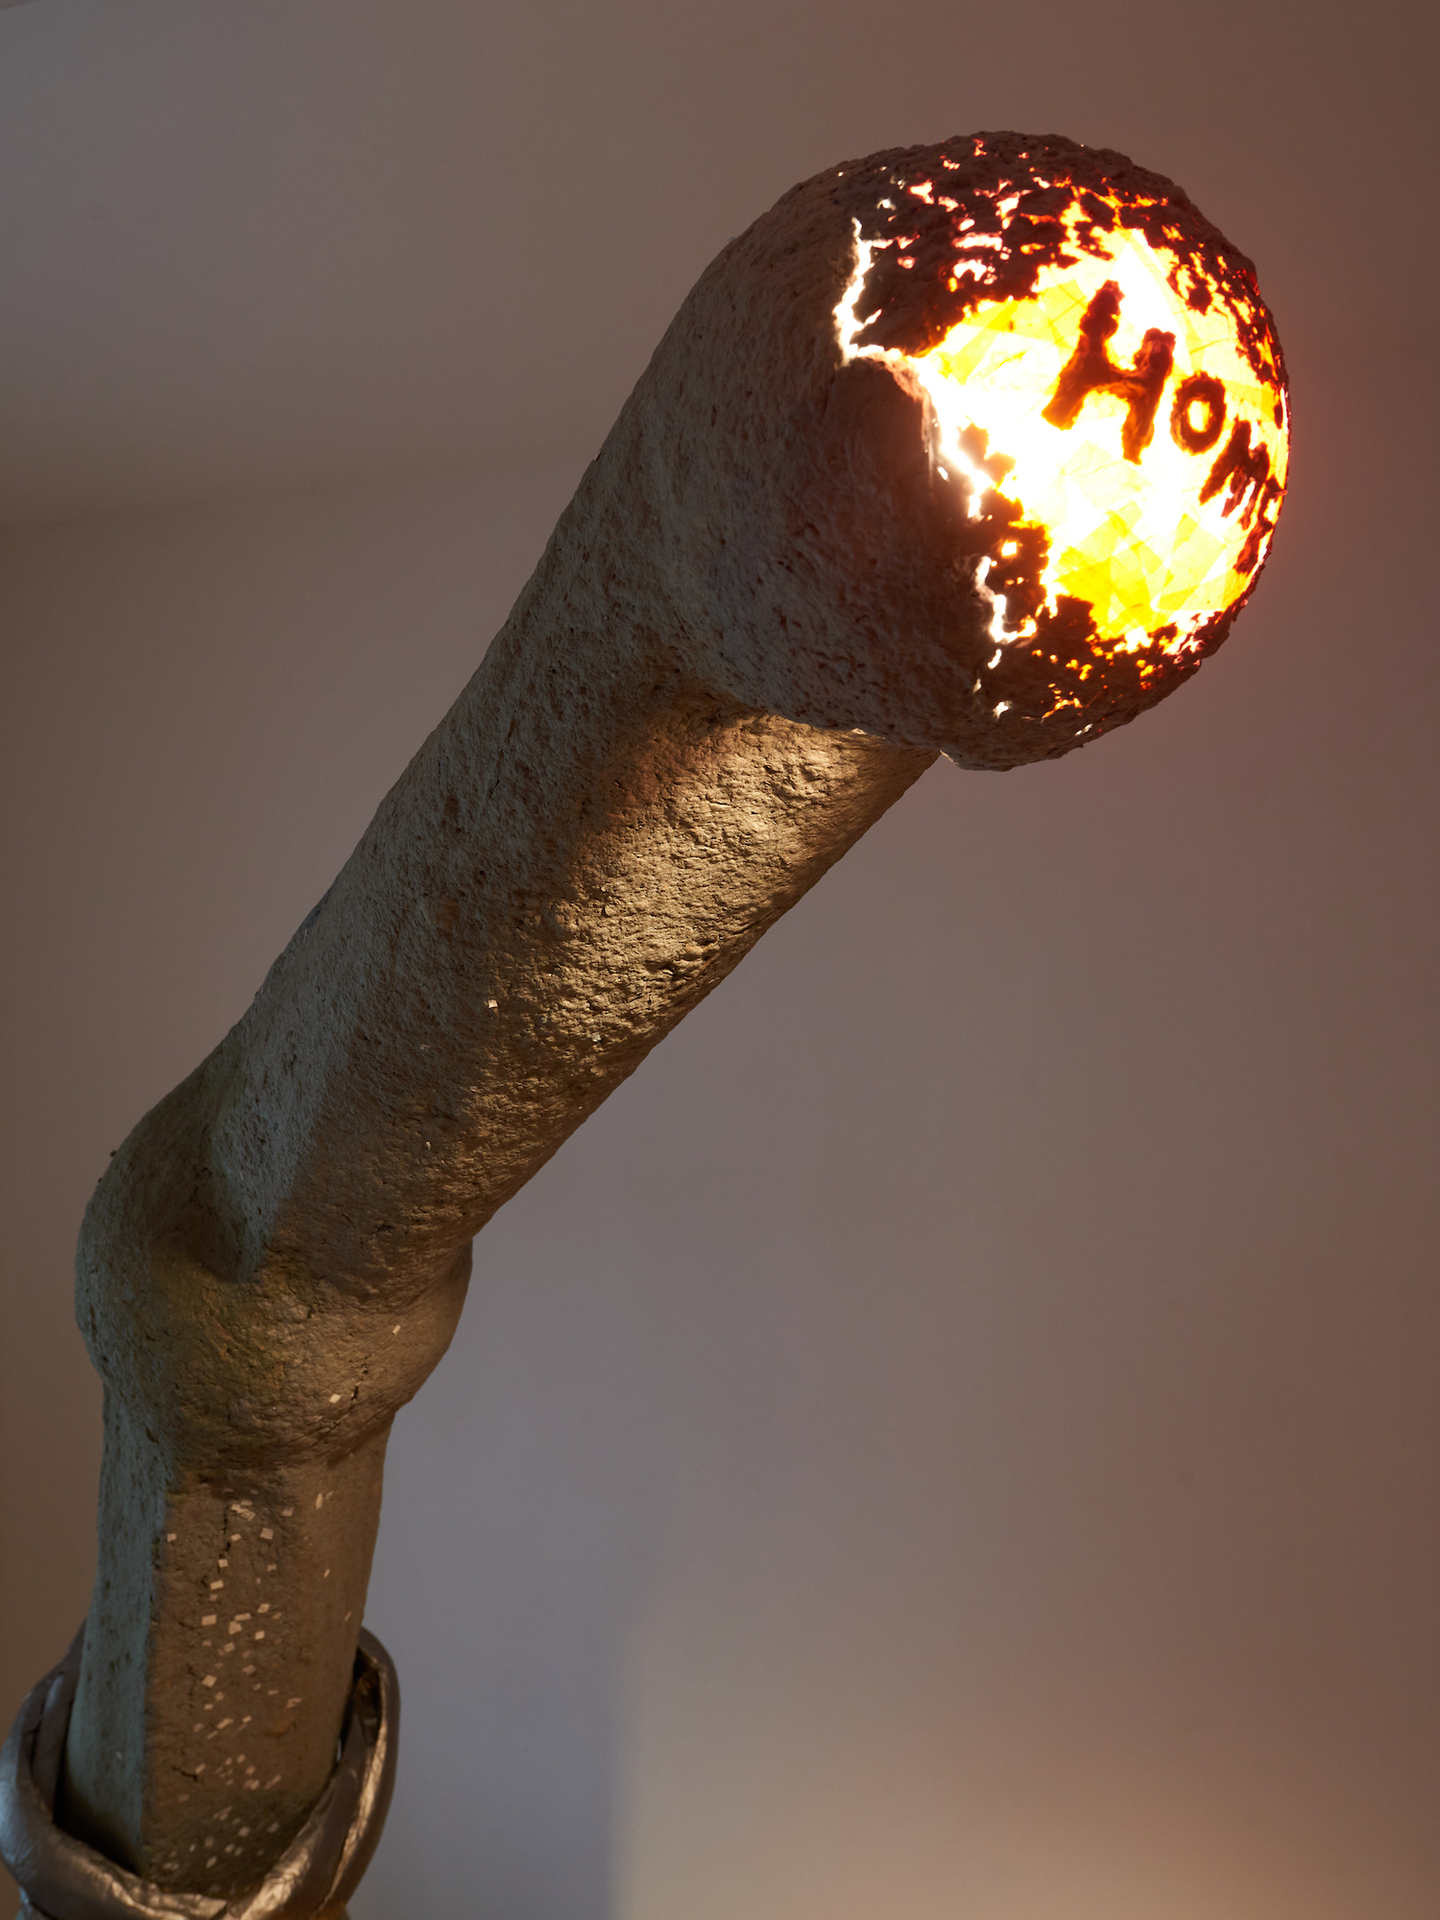 Niclas Riepshoff, Ring Finger (E.T.) 2, 2020, Paper mache, lamp, 185 x 30 x 115 cm